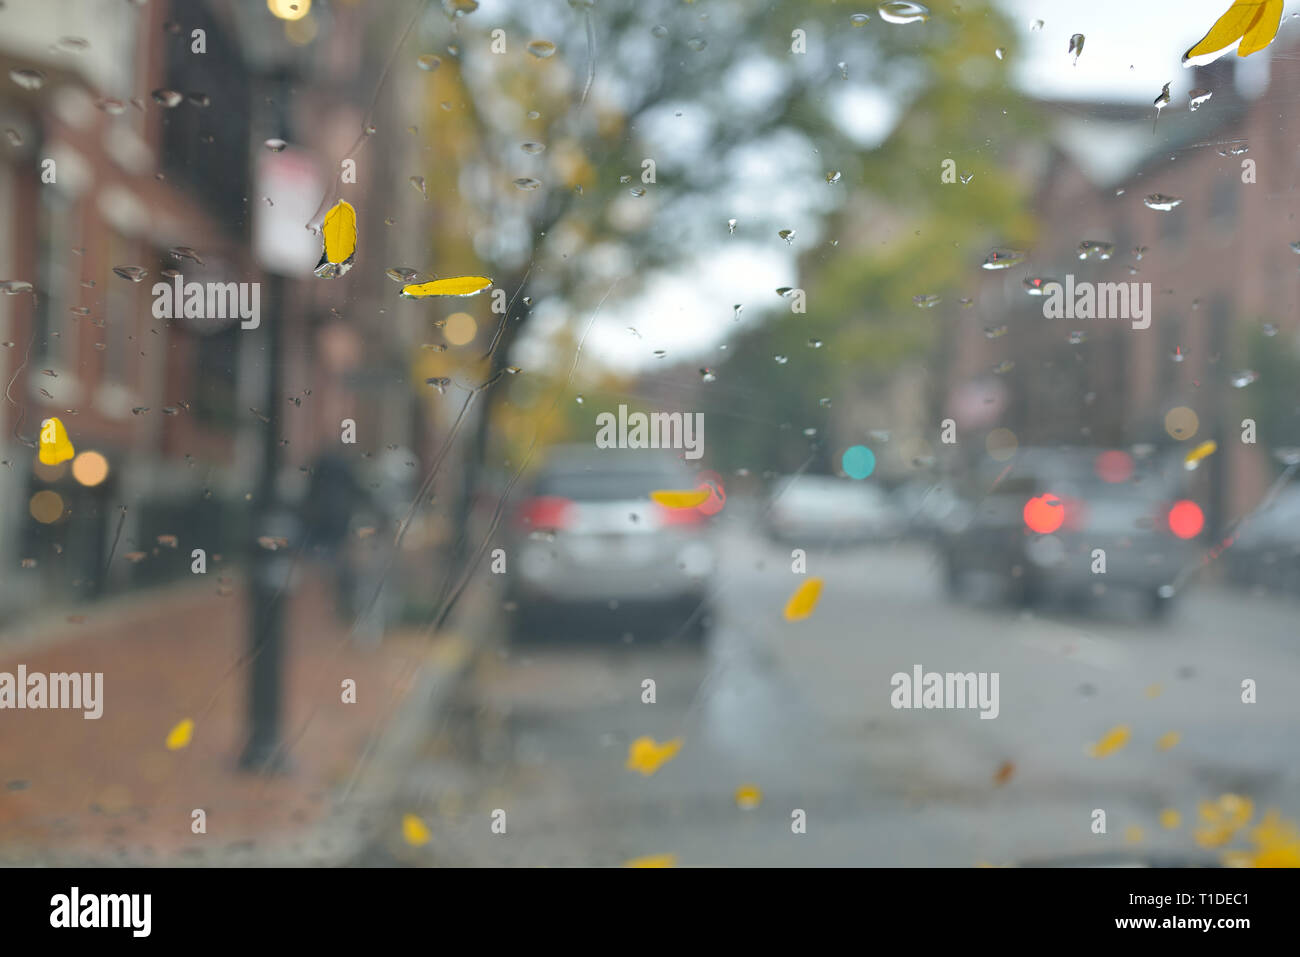 Autumn rain, abstract background. Wet windshield, yellow leaves and raindrops, boston city street Stock Photo